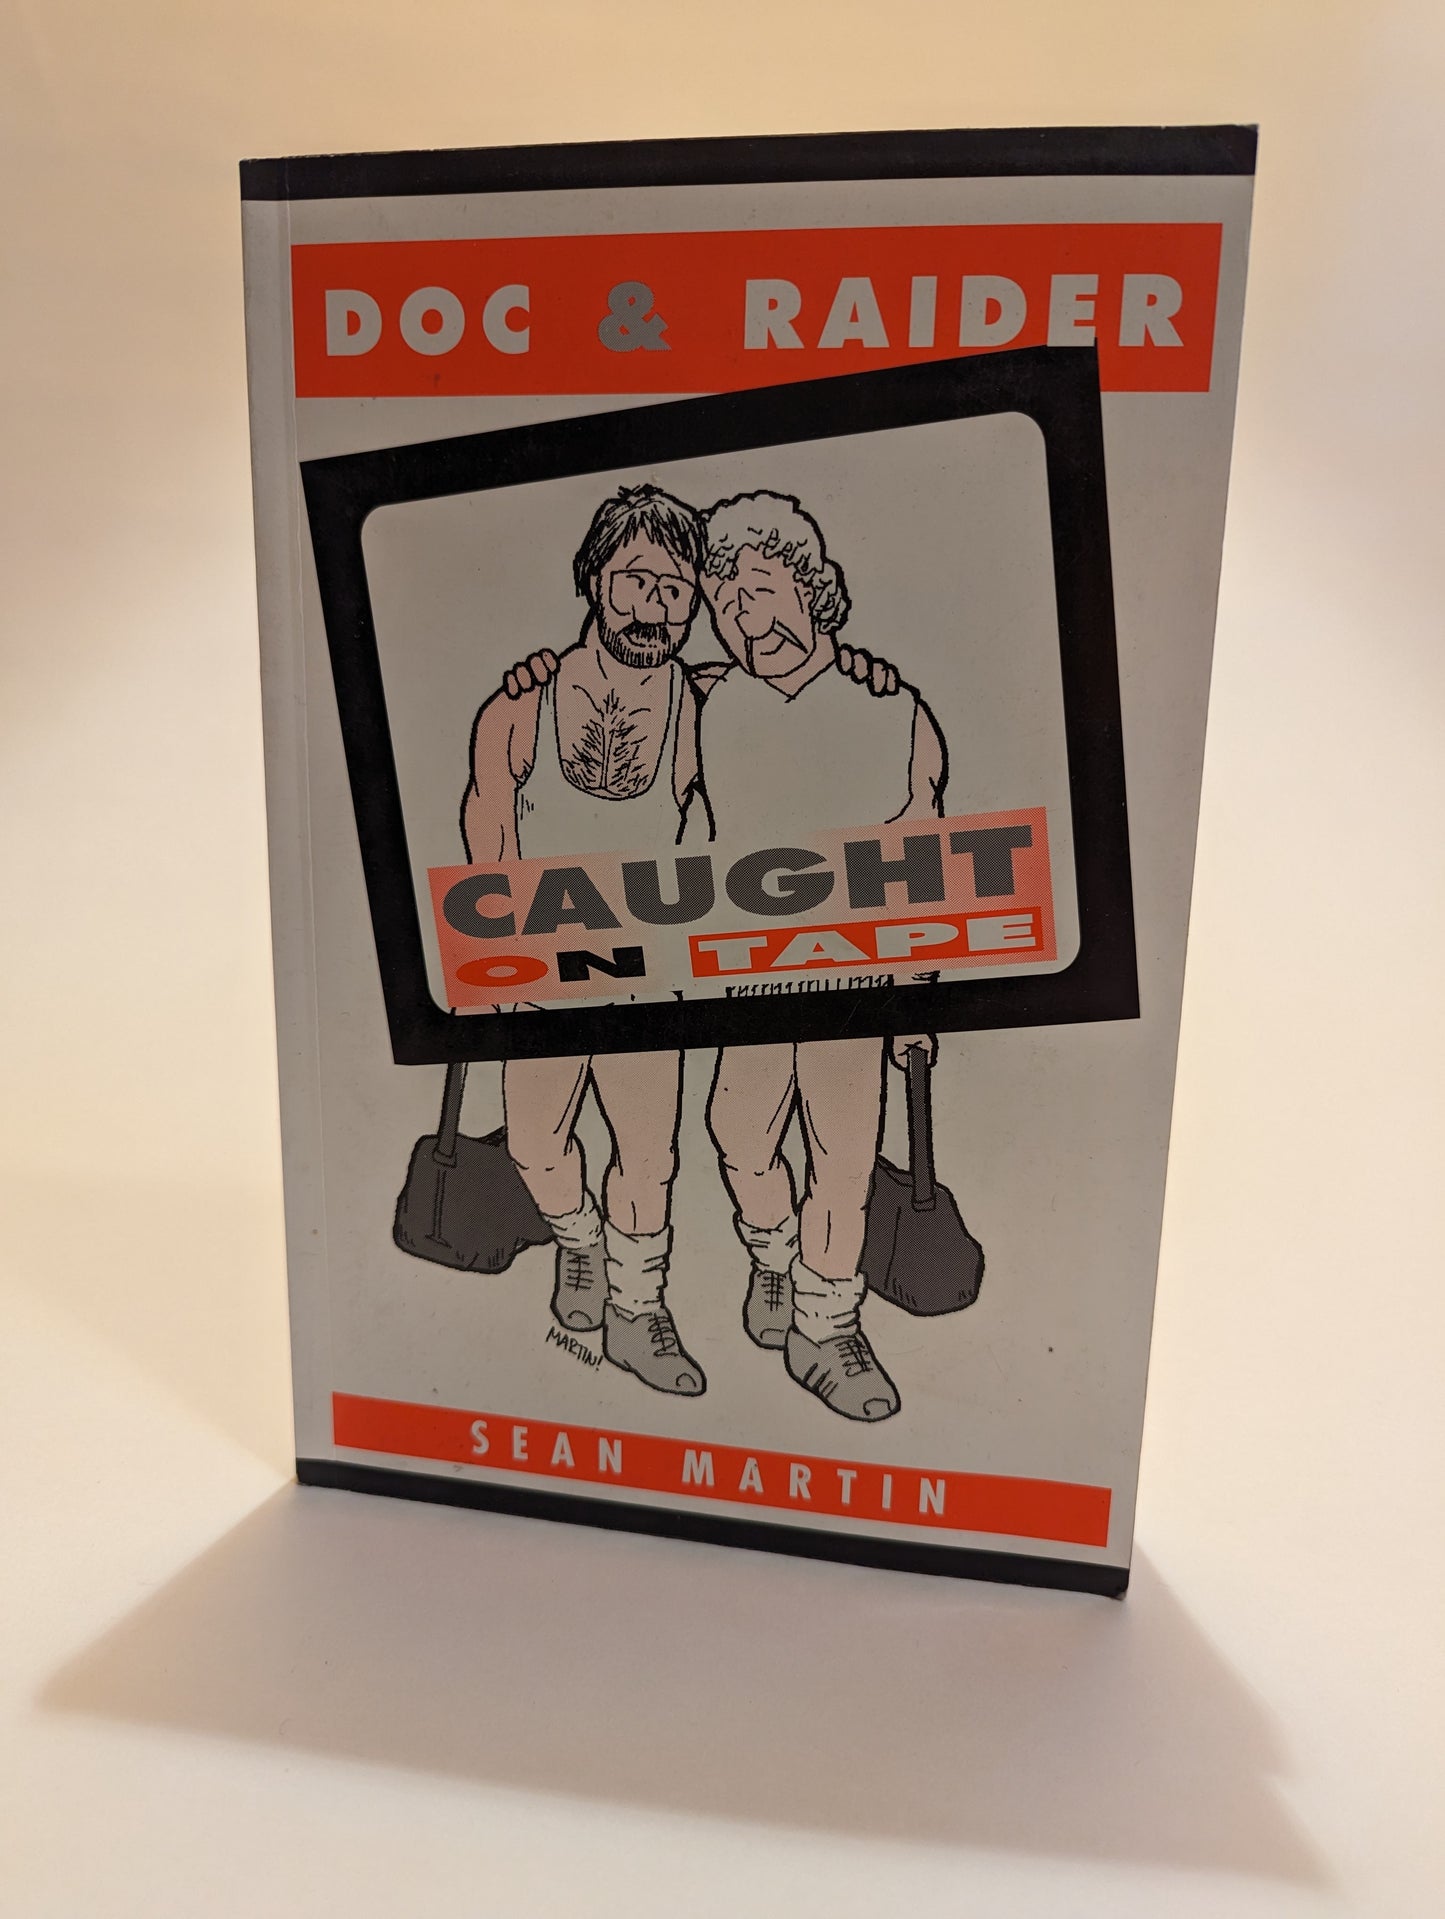 Doc & Raider Caught on Tape [Sean Martin]